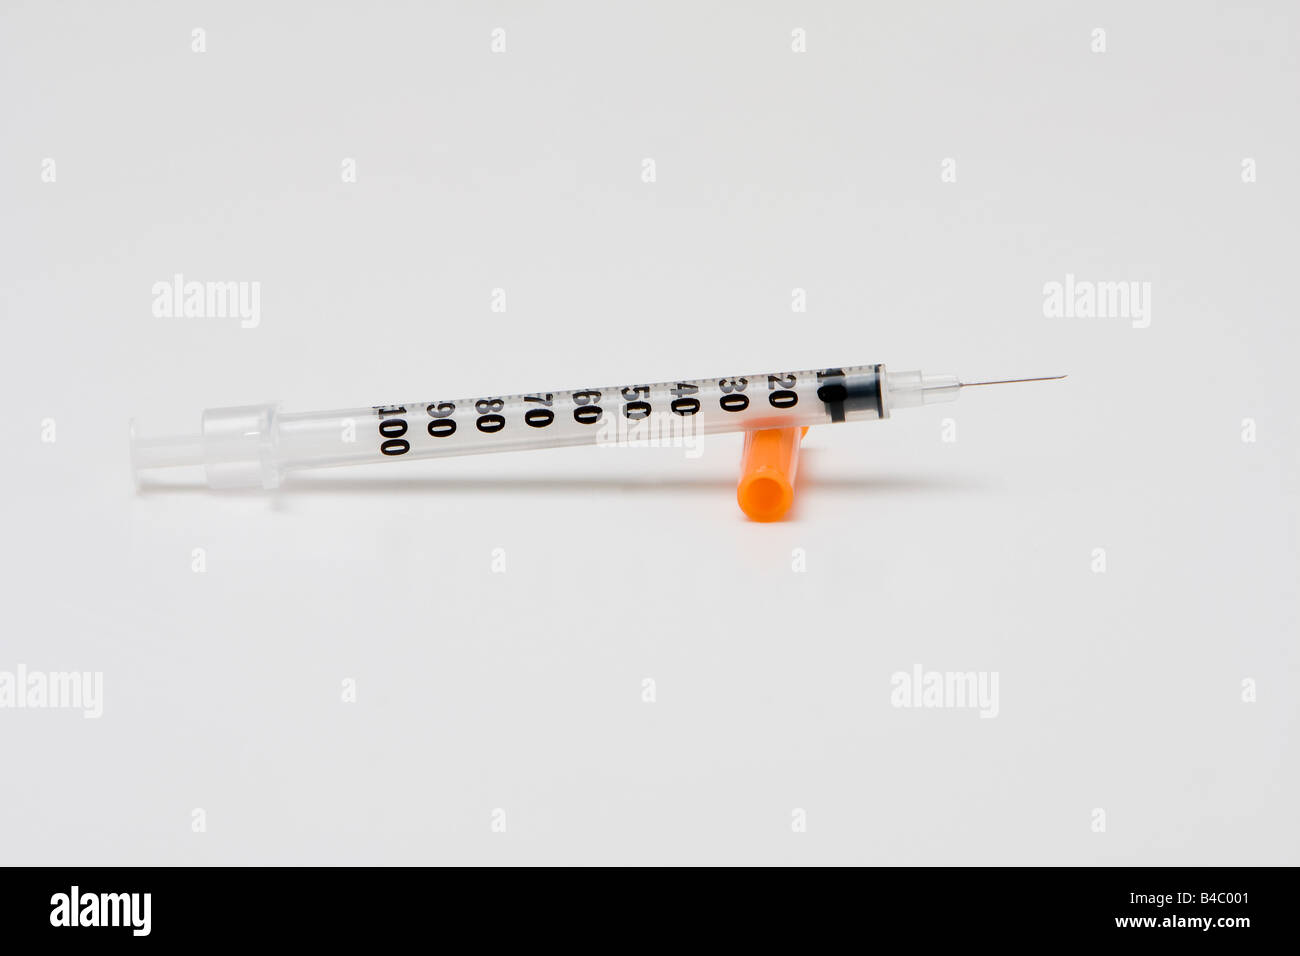 Close On Insulin Needles Stock Photo 140171335